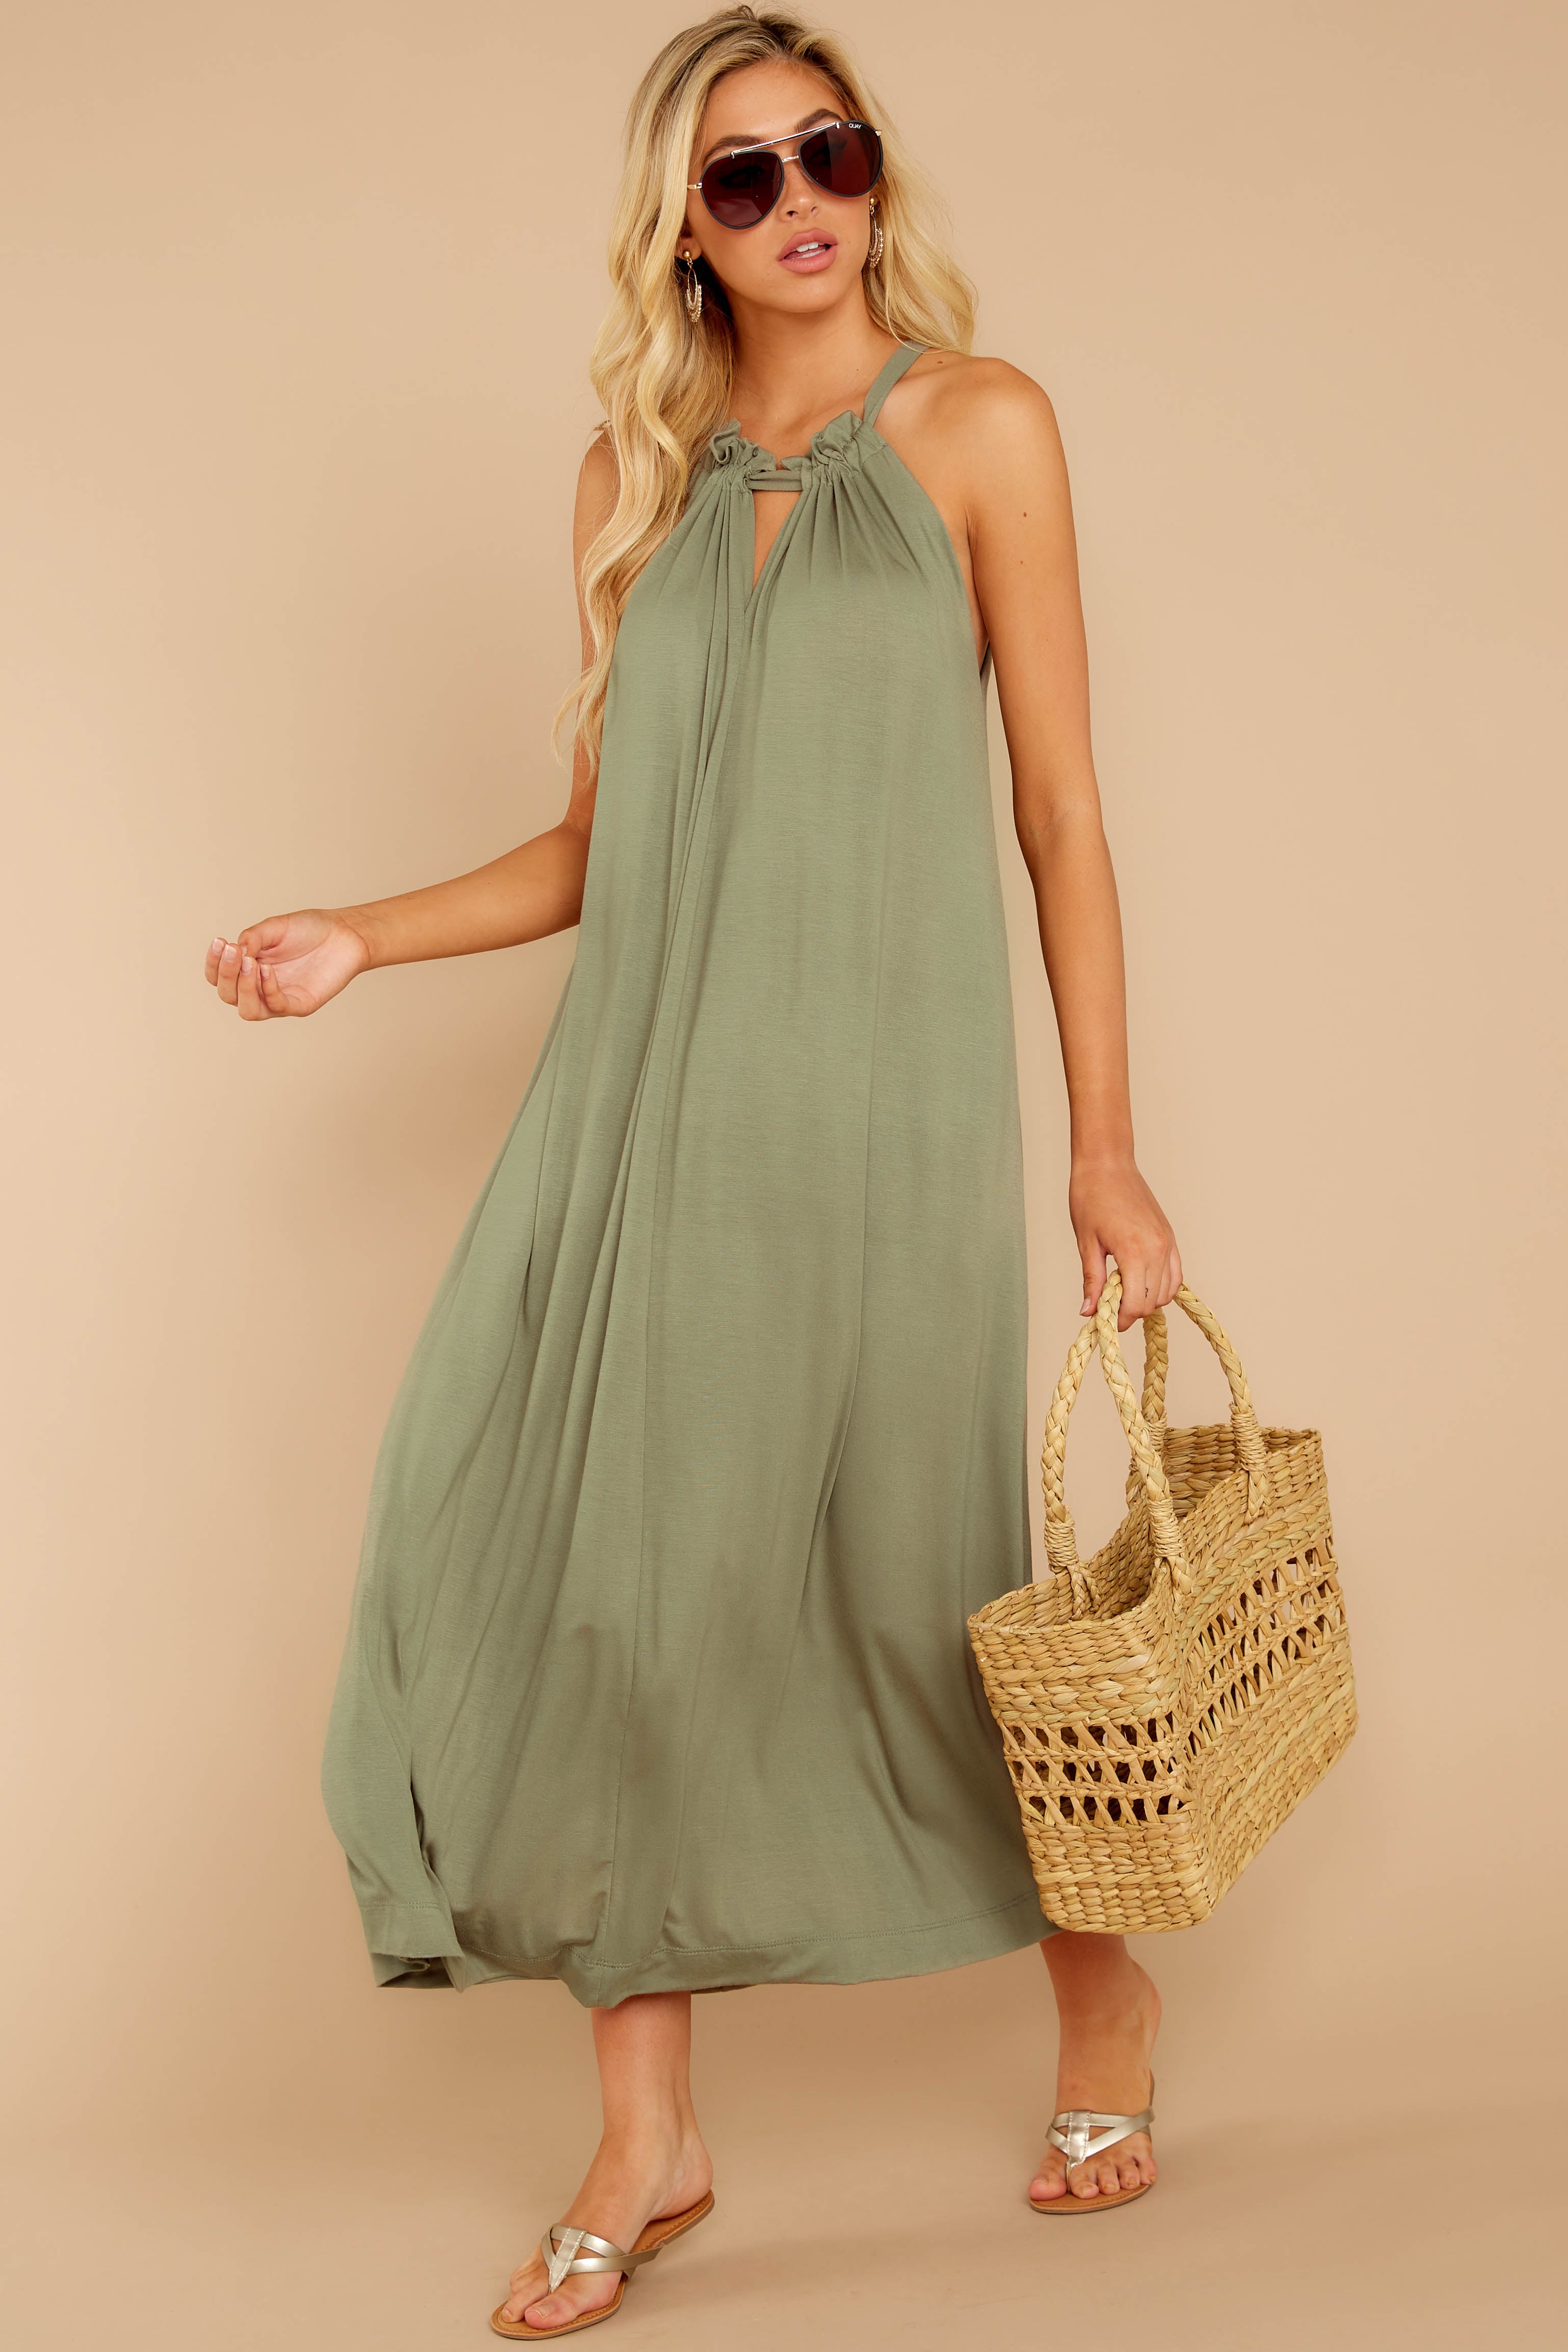 Cute Green Halter Midi Dress - Soft Sleeveless Midi - Dress - $40.00 ...